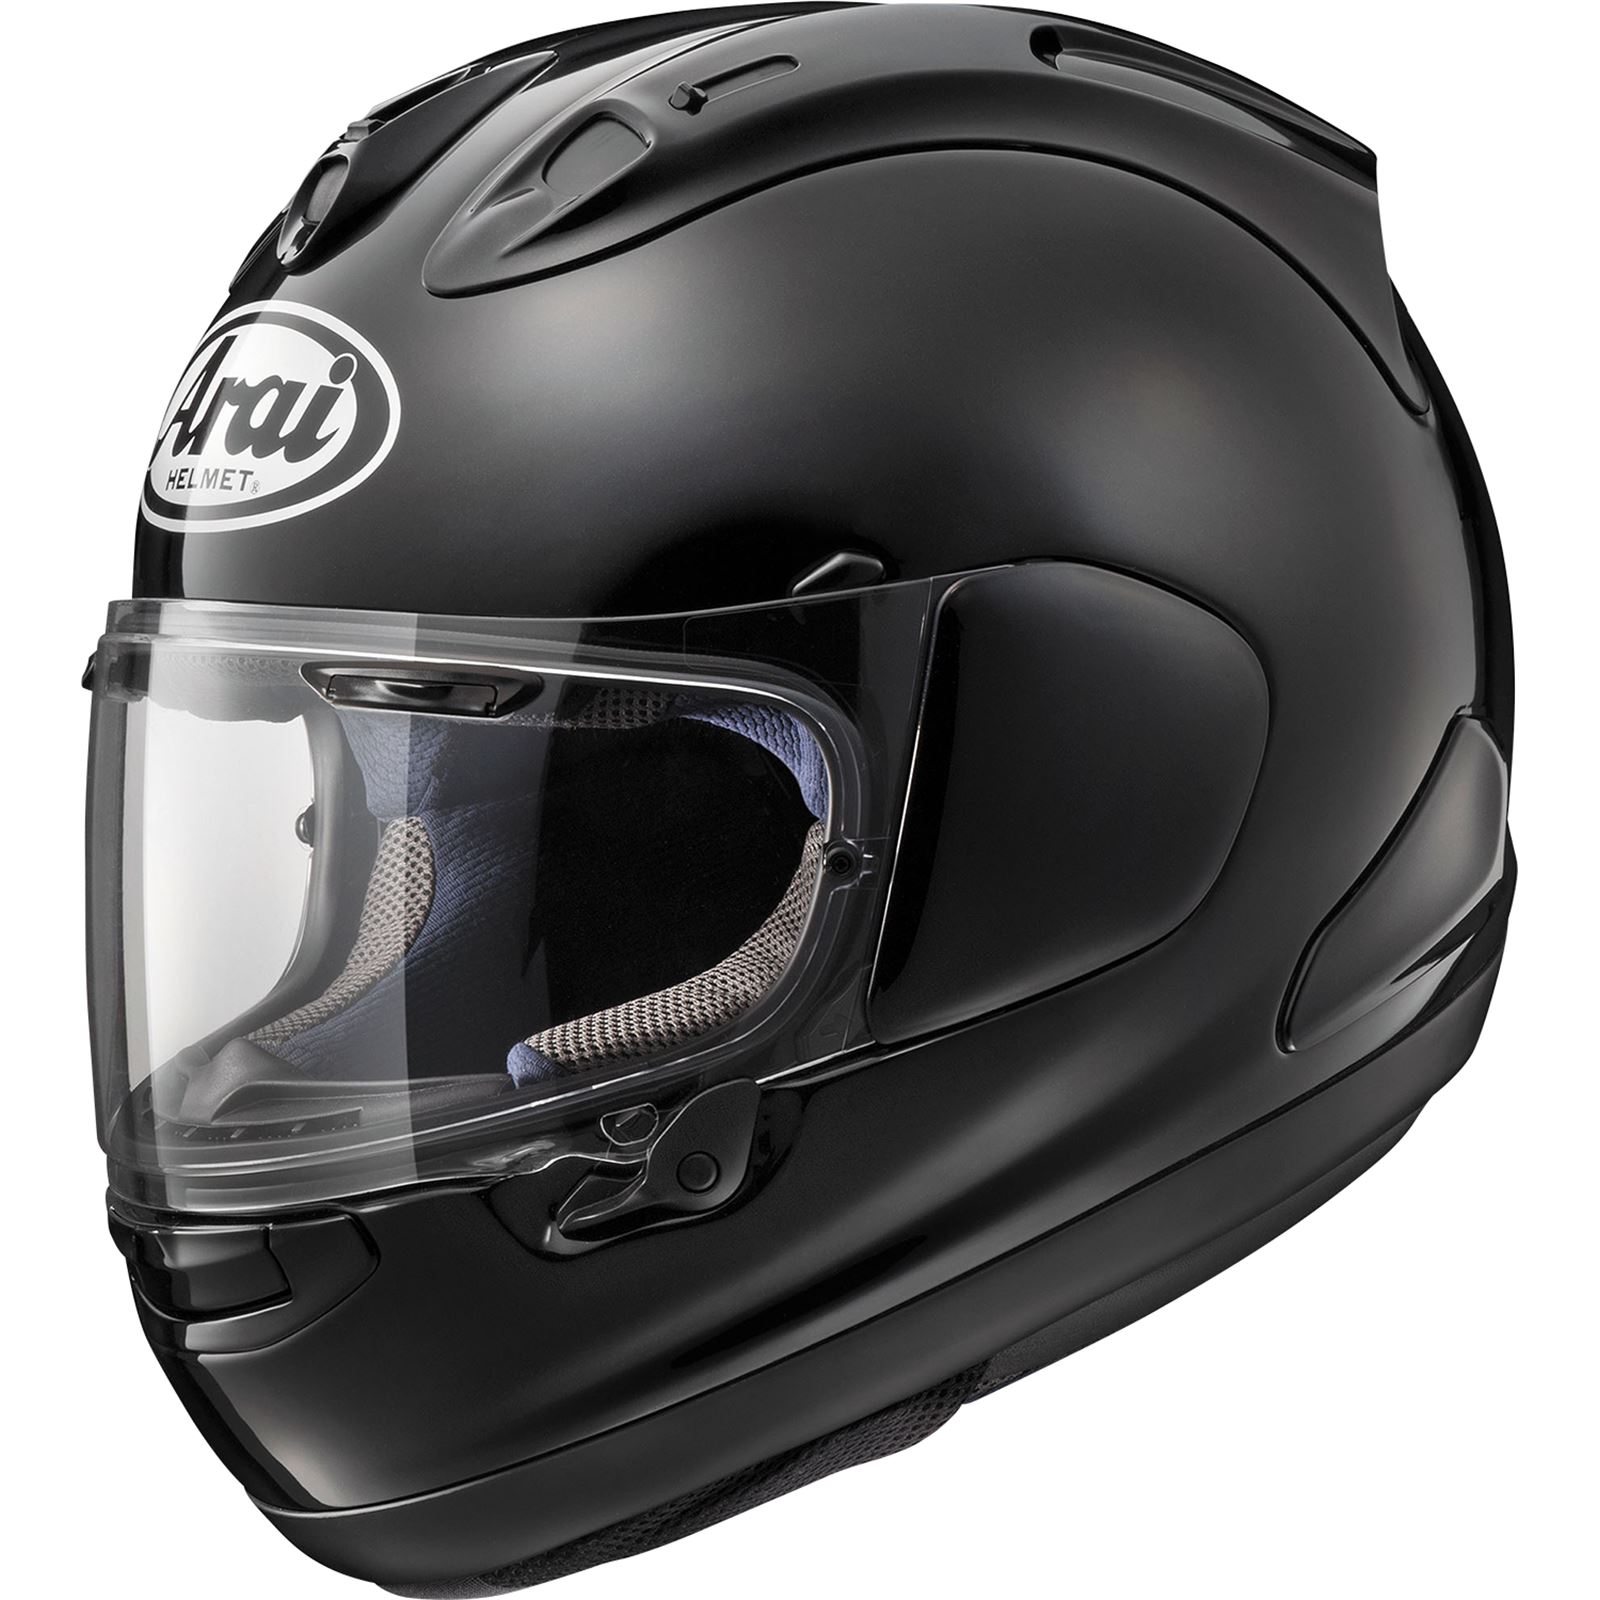 Arai Corsair-X Solid Helmet - Black - Small